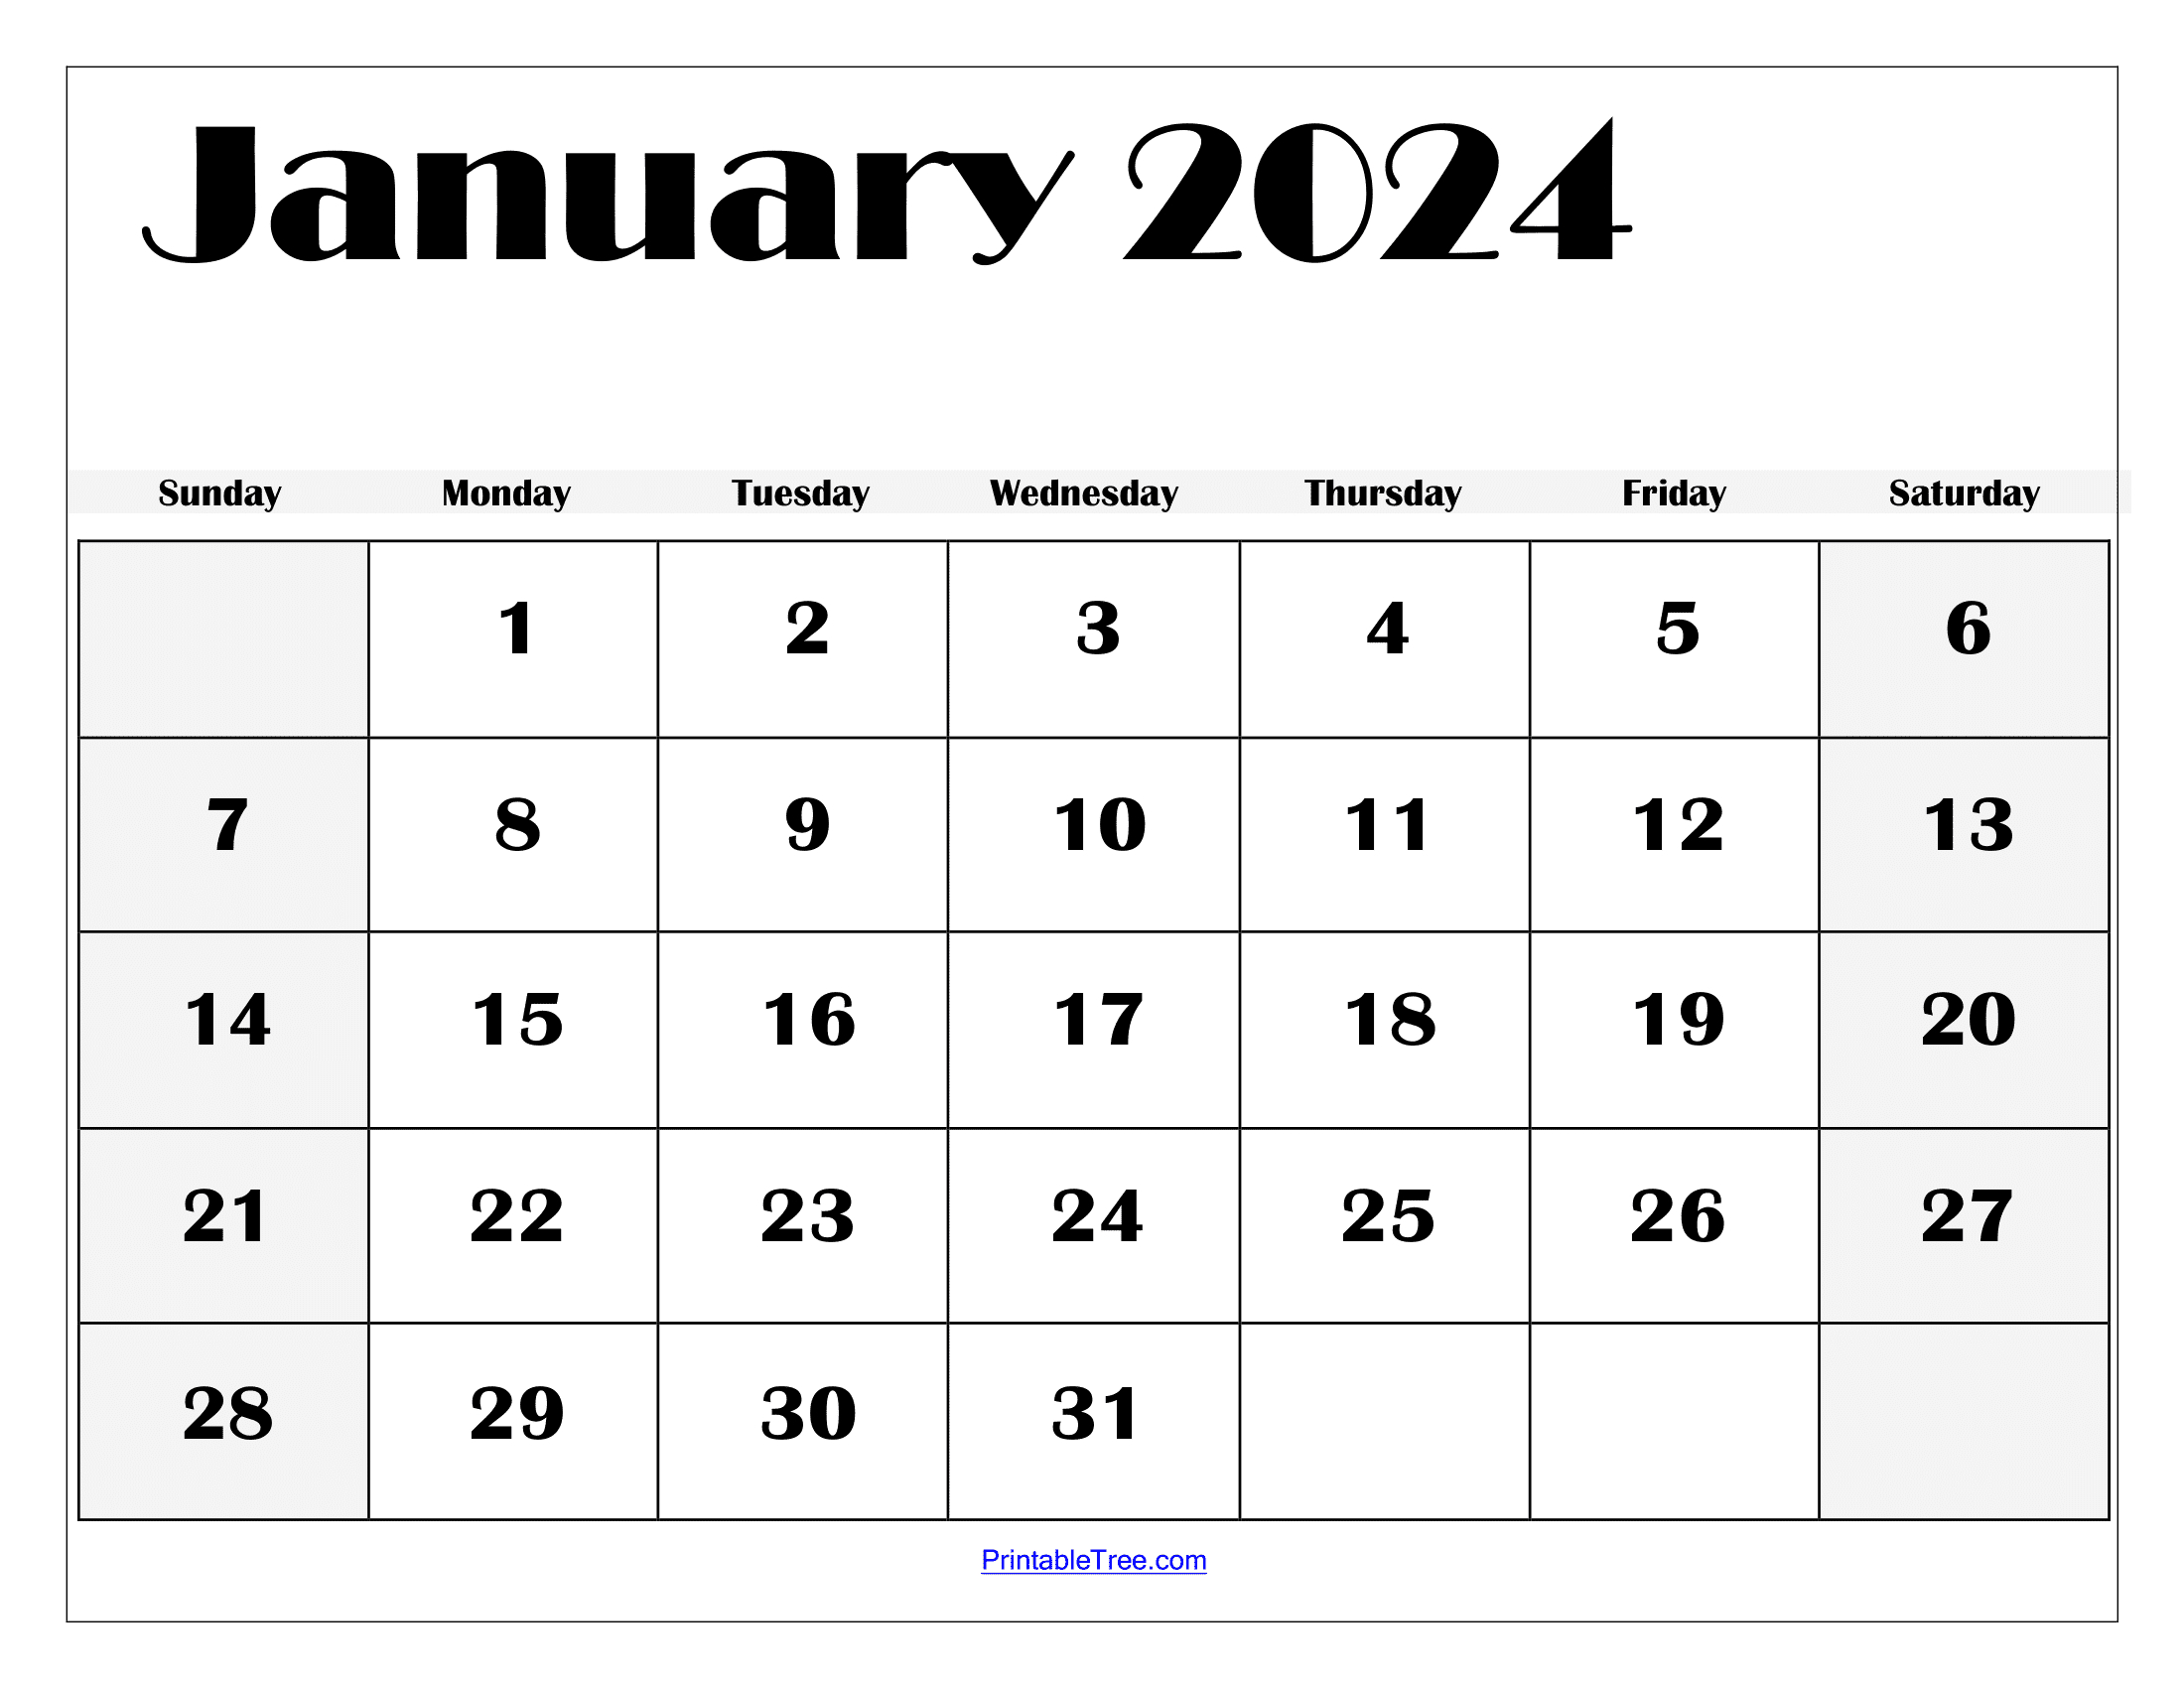 January 2024 Calendar Printable Pdf Template With Holidays | Calendar 2024